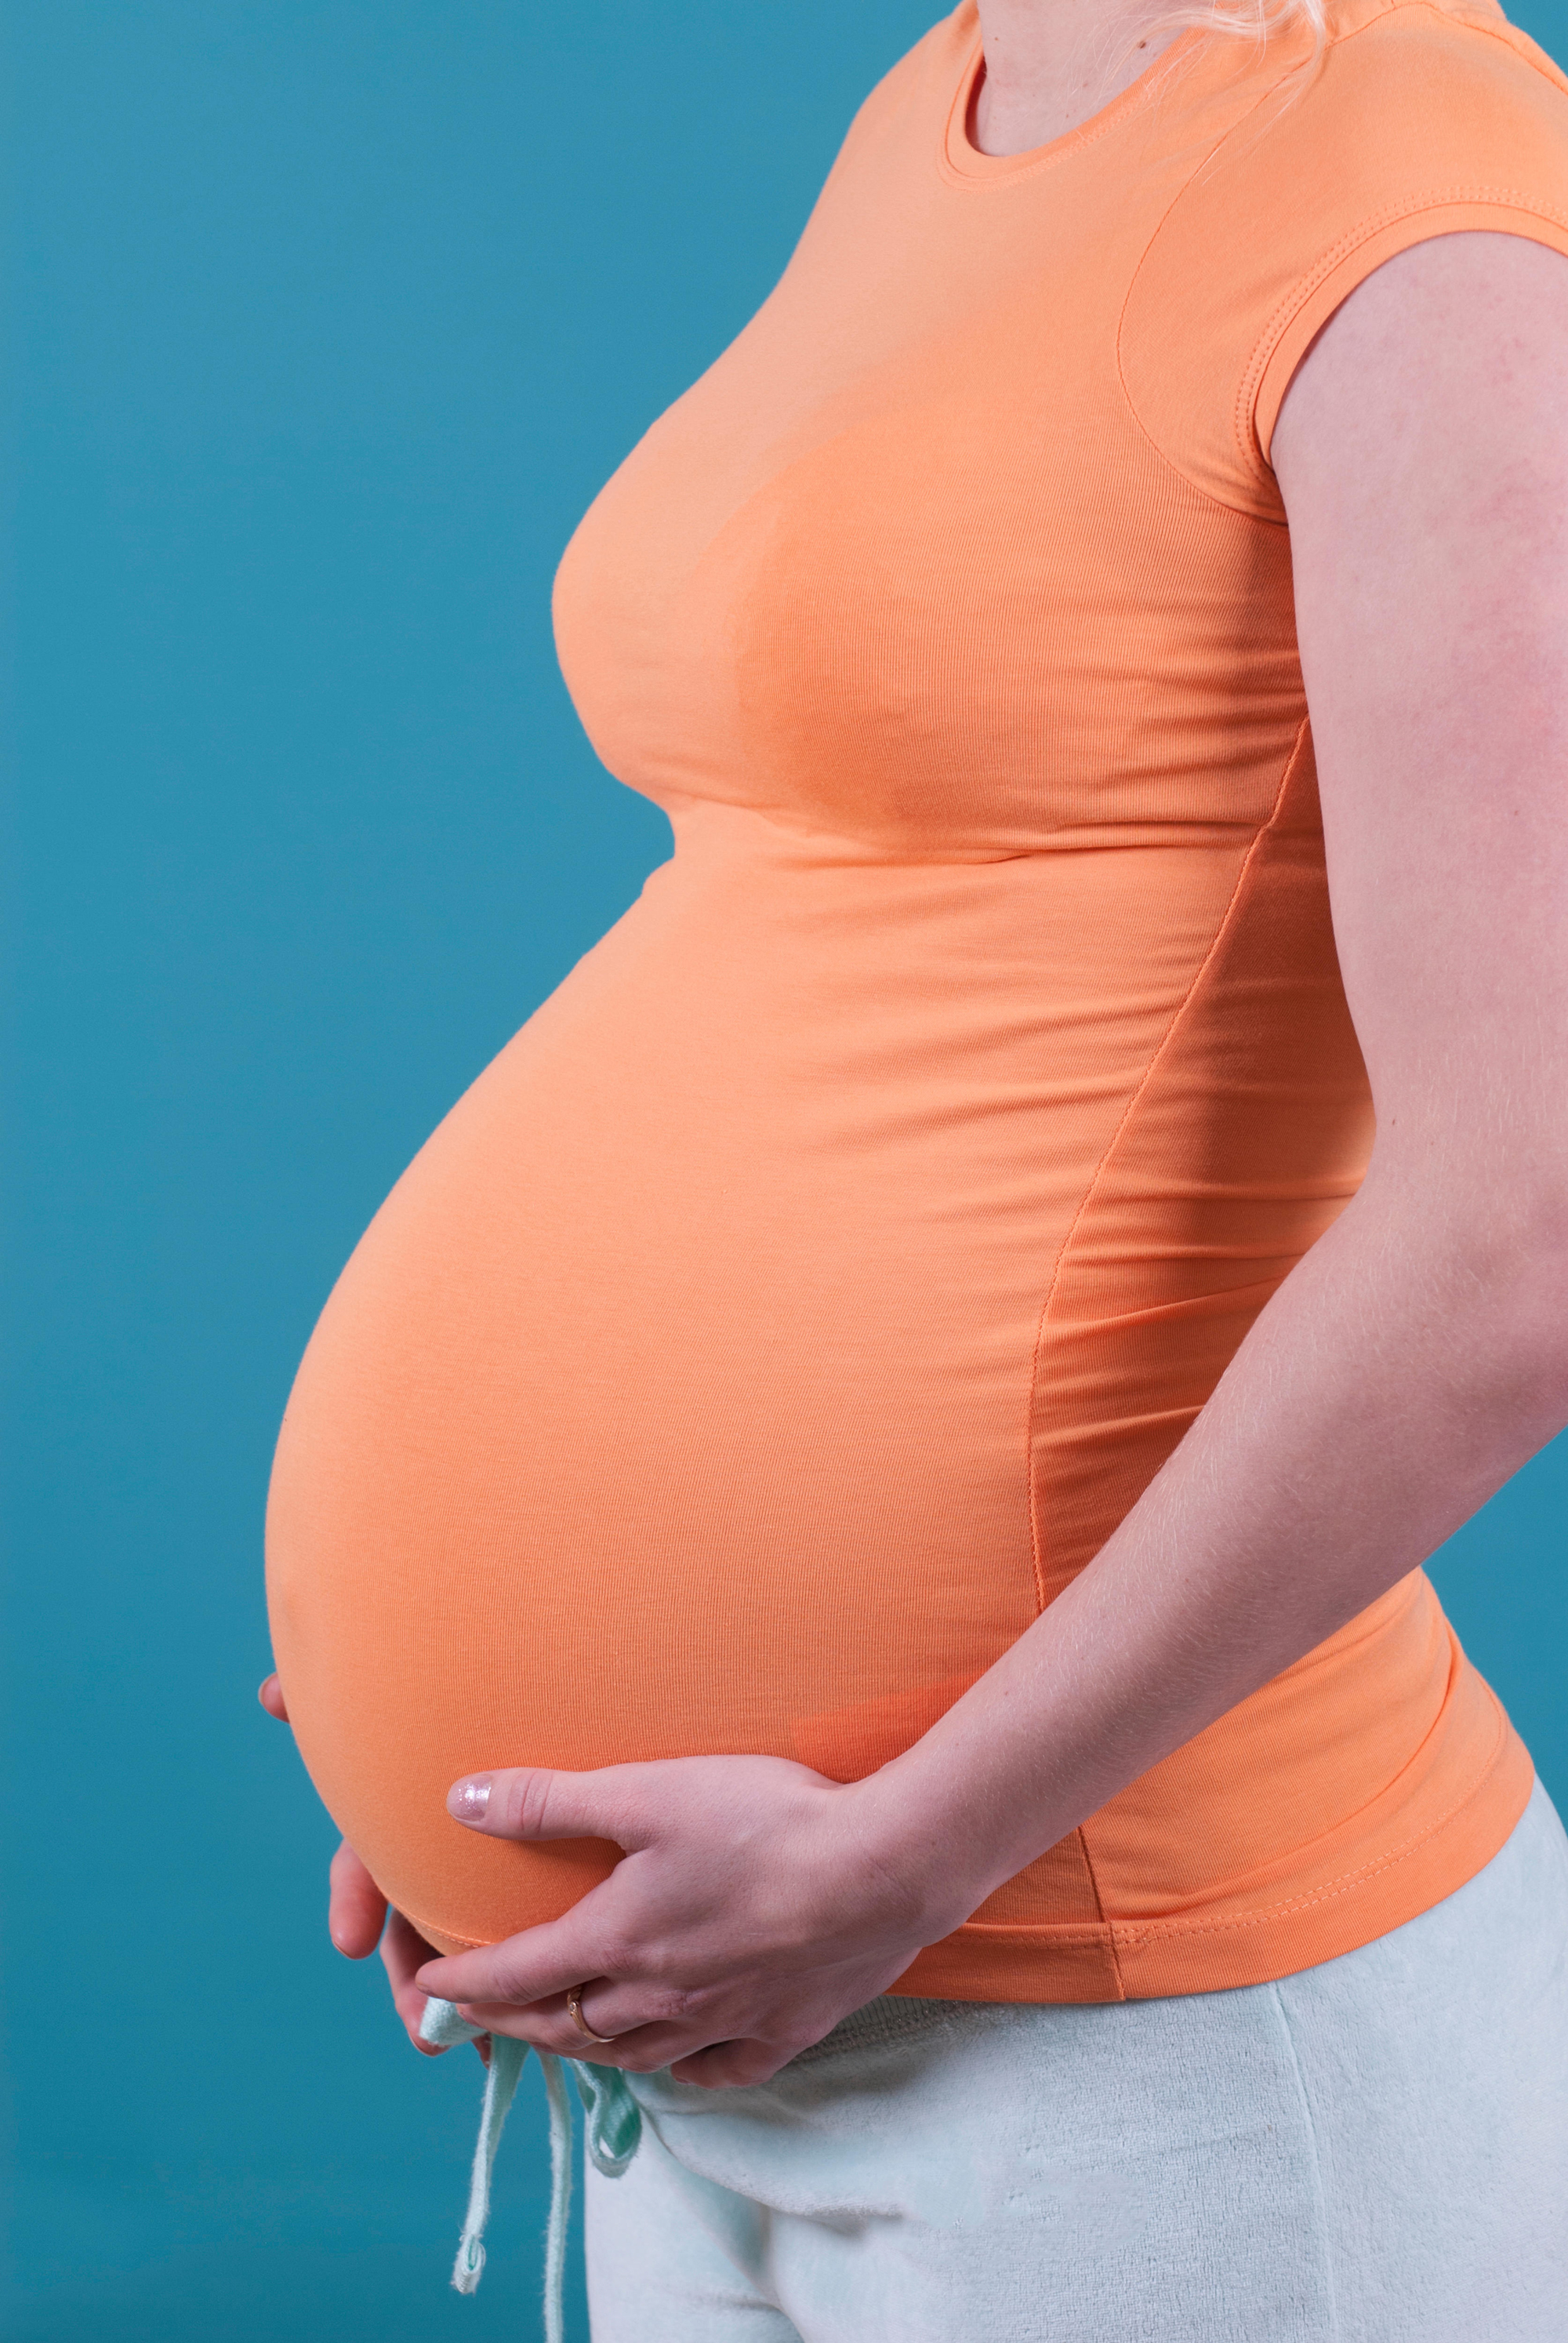 Pregnant woman baby bump